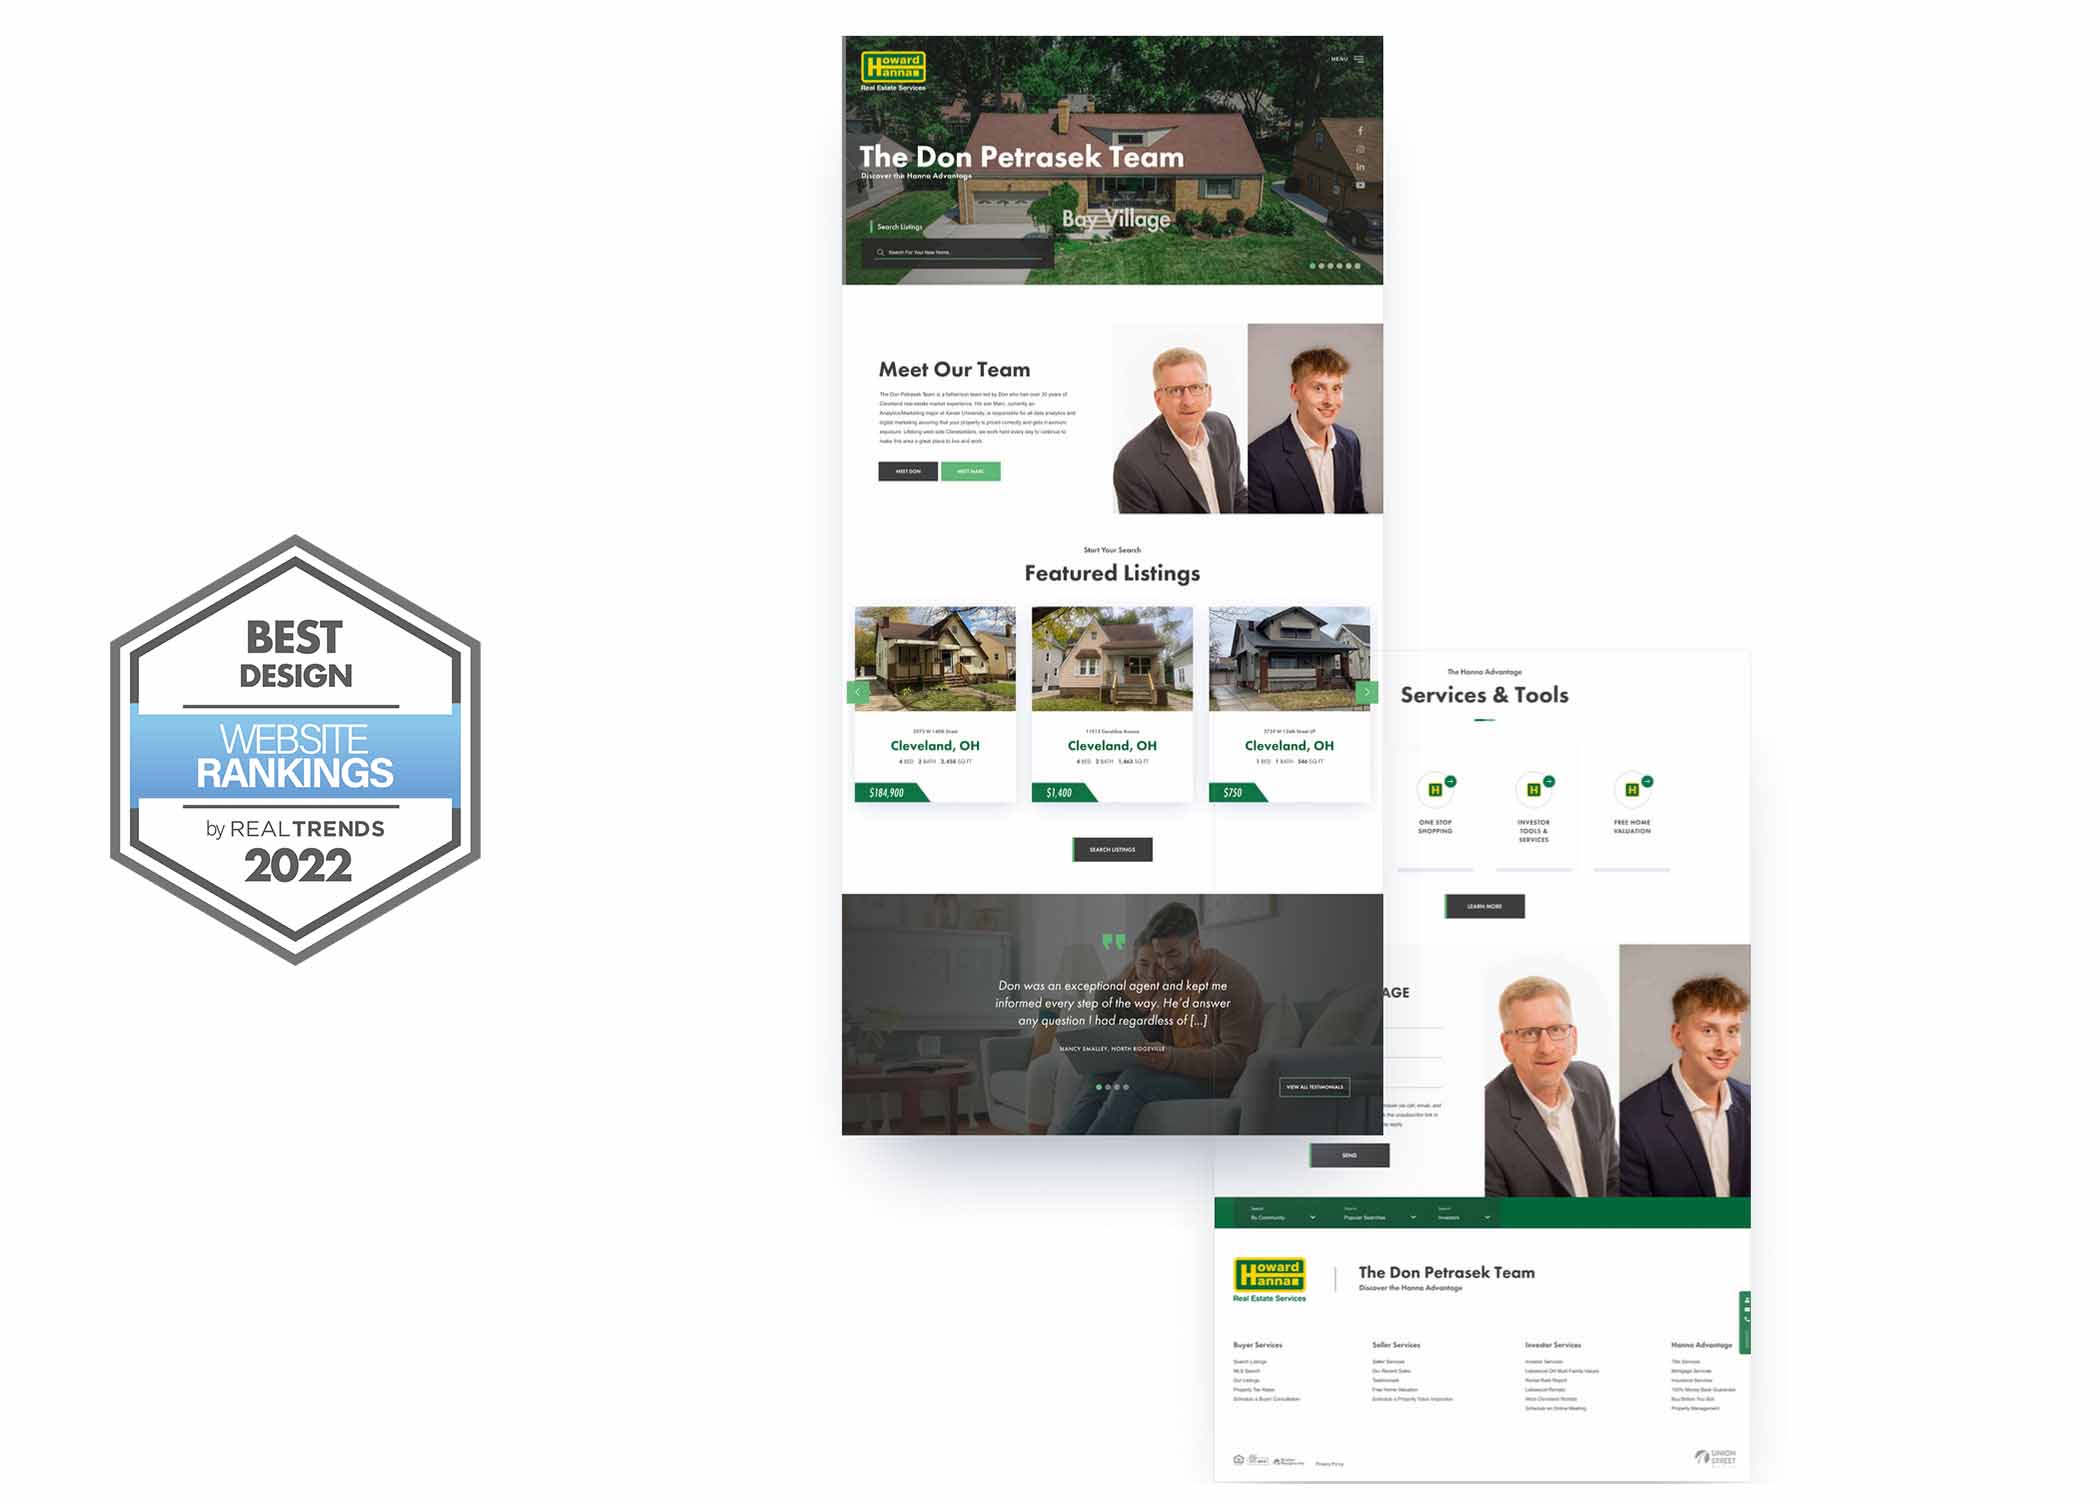 howard hanna don petrasek team real estate website and union street media 2022 realtrends best design